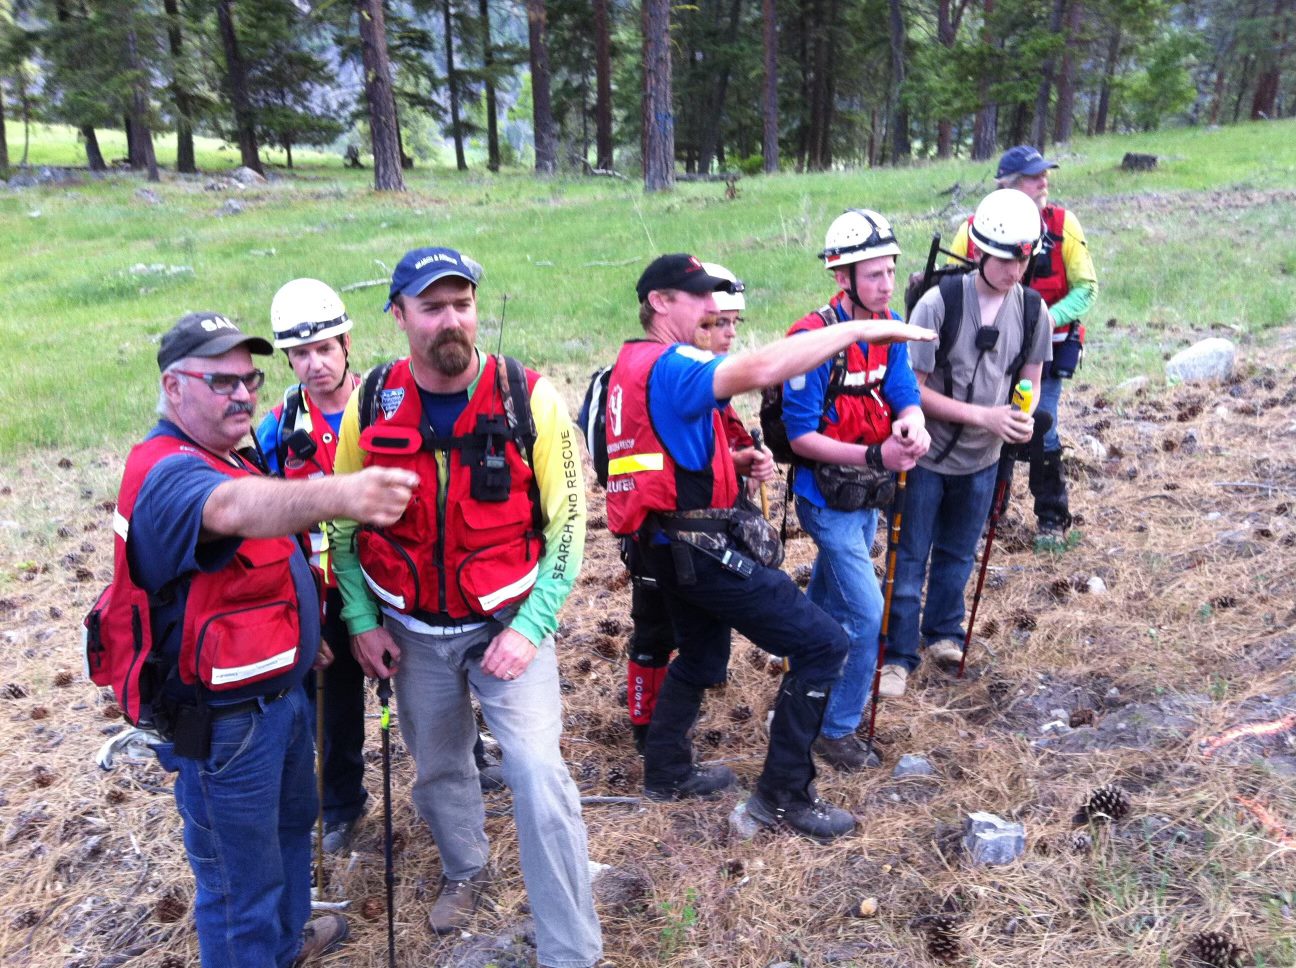 Arnie Powell, far left, during Princeton Search & Rescue team drills.